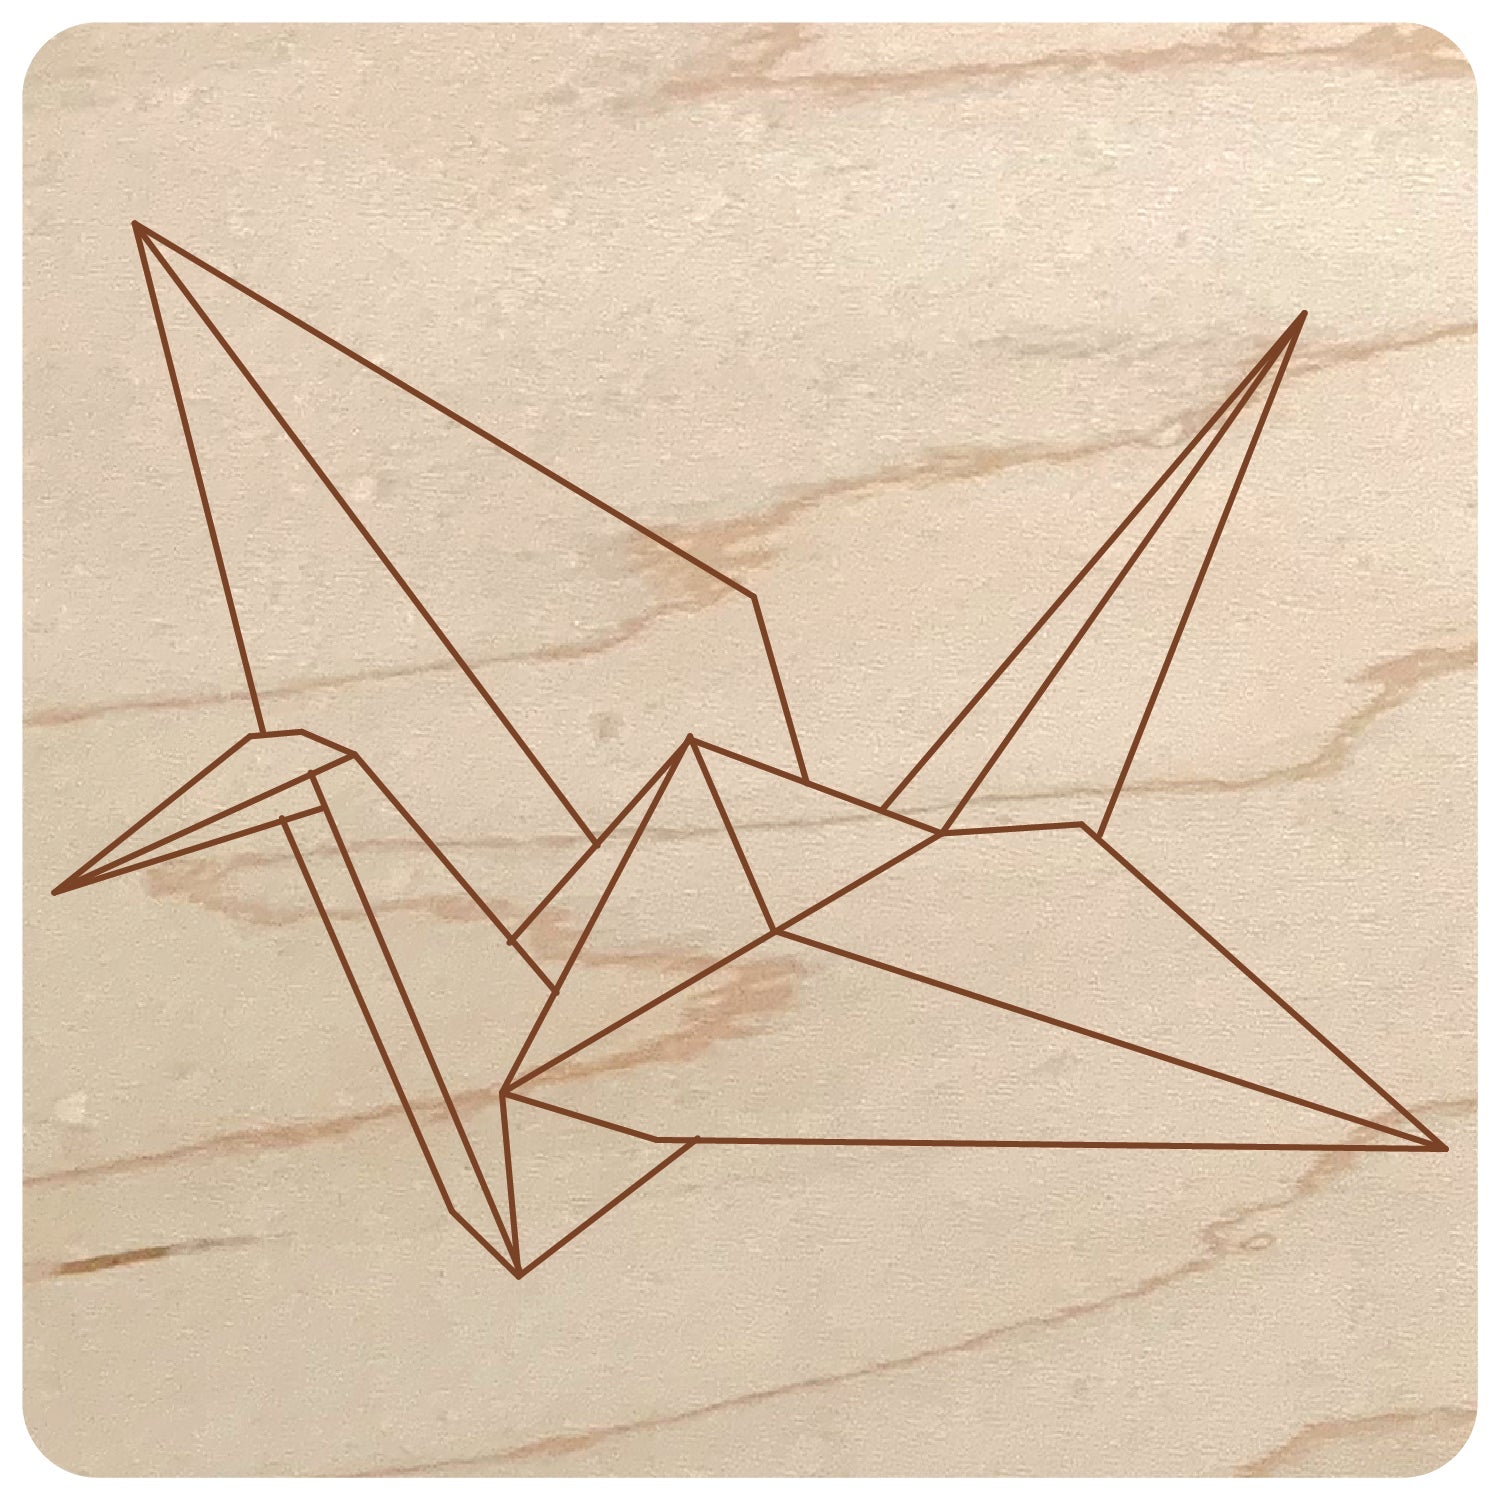 Laser Cut Wood Geometric Design for Wall - geometric crane design on maple wood - by LeeMo Designs in Bend, Oregon